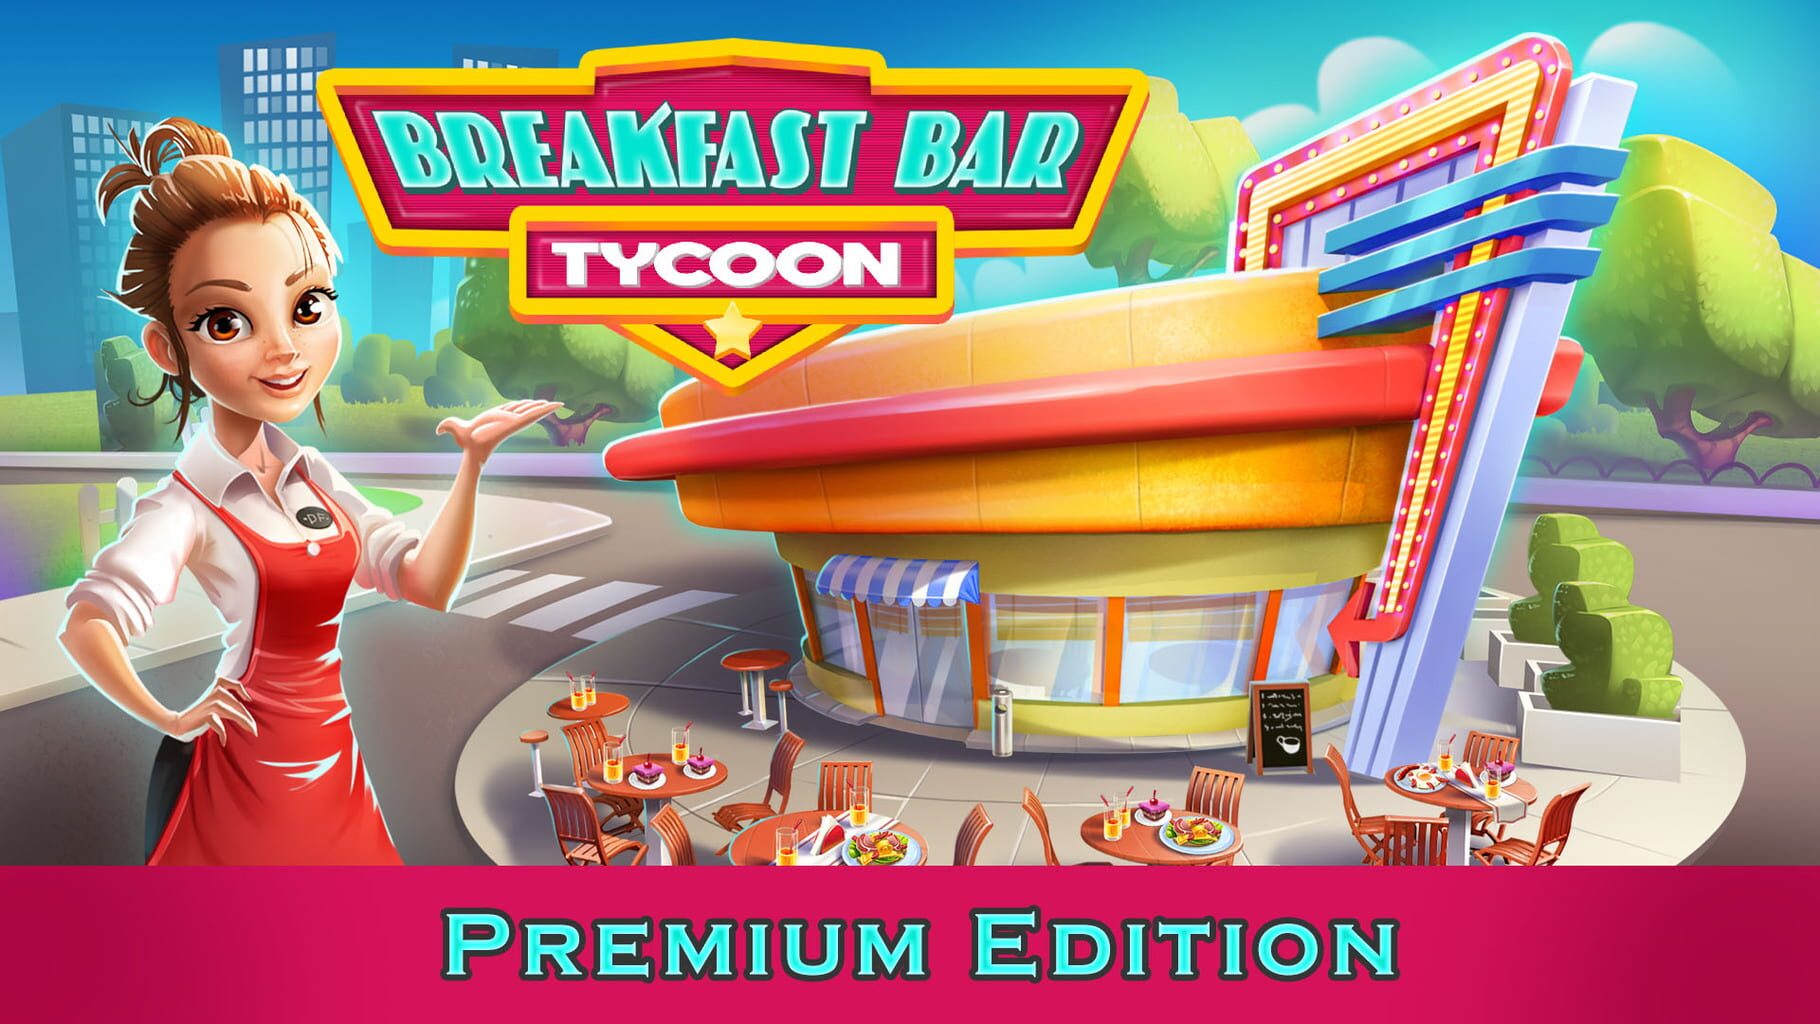 Breakfast Bar Tycoon: Premium Edition artwork